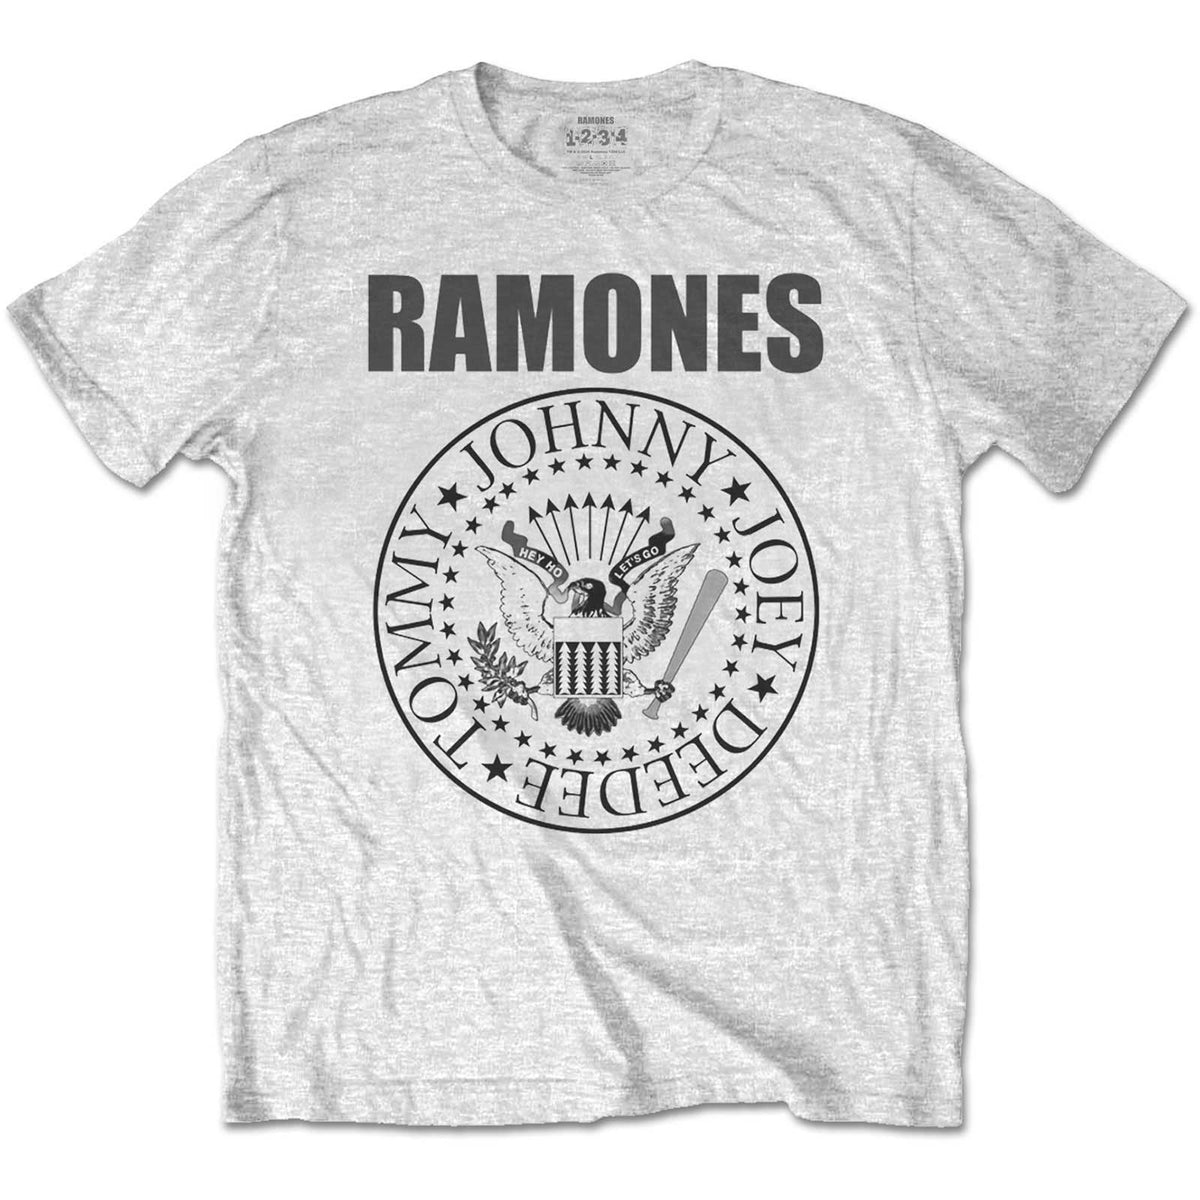 Ramones Kids T-Shirt - Presidential Seal - Grey  Kids Official Licensed Design